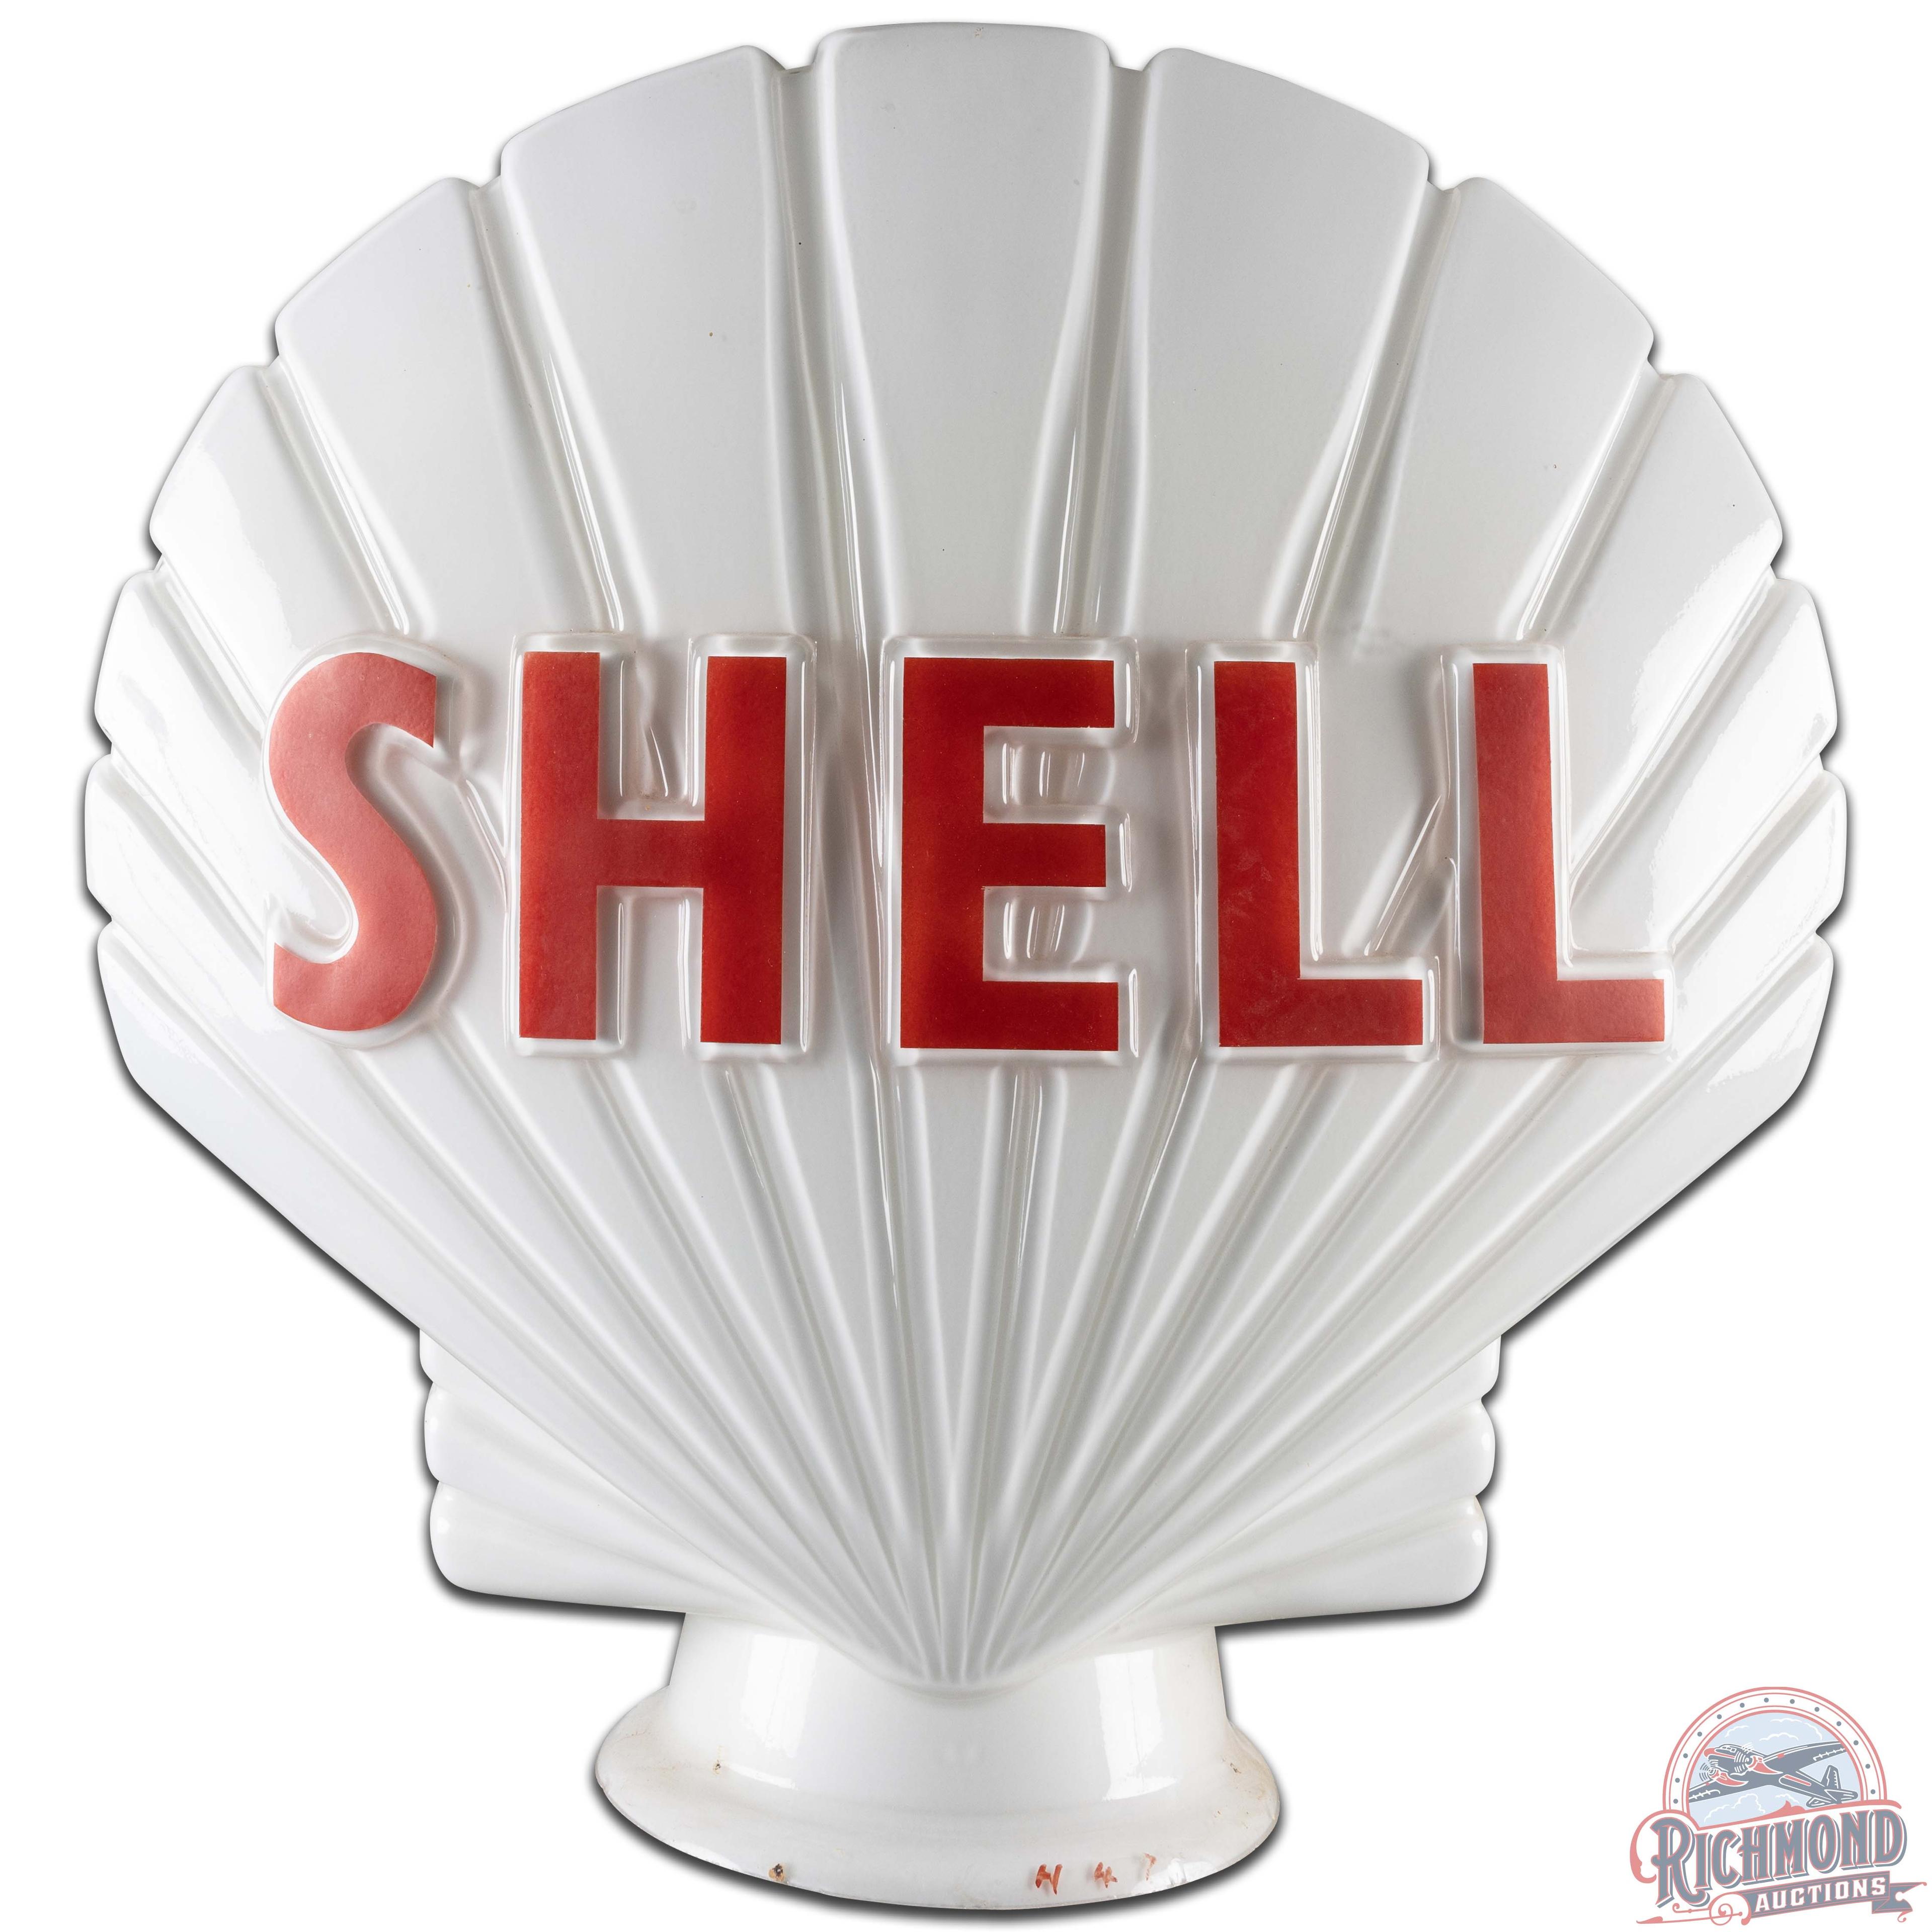 Shell OPC Milk Glass Gas Pump Globe